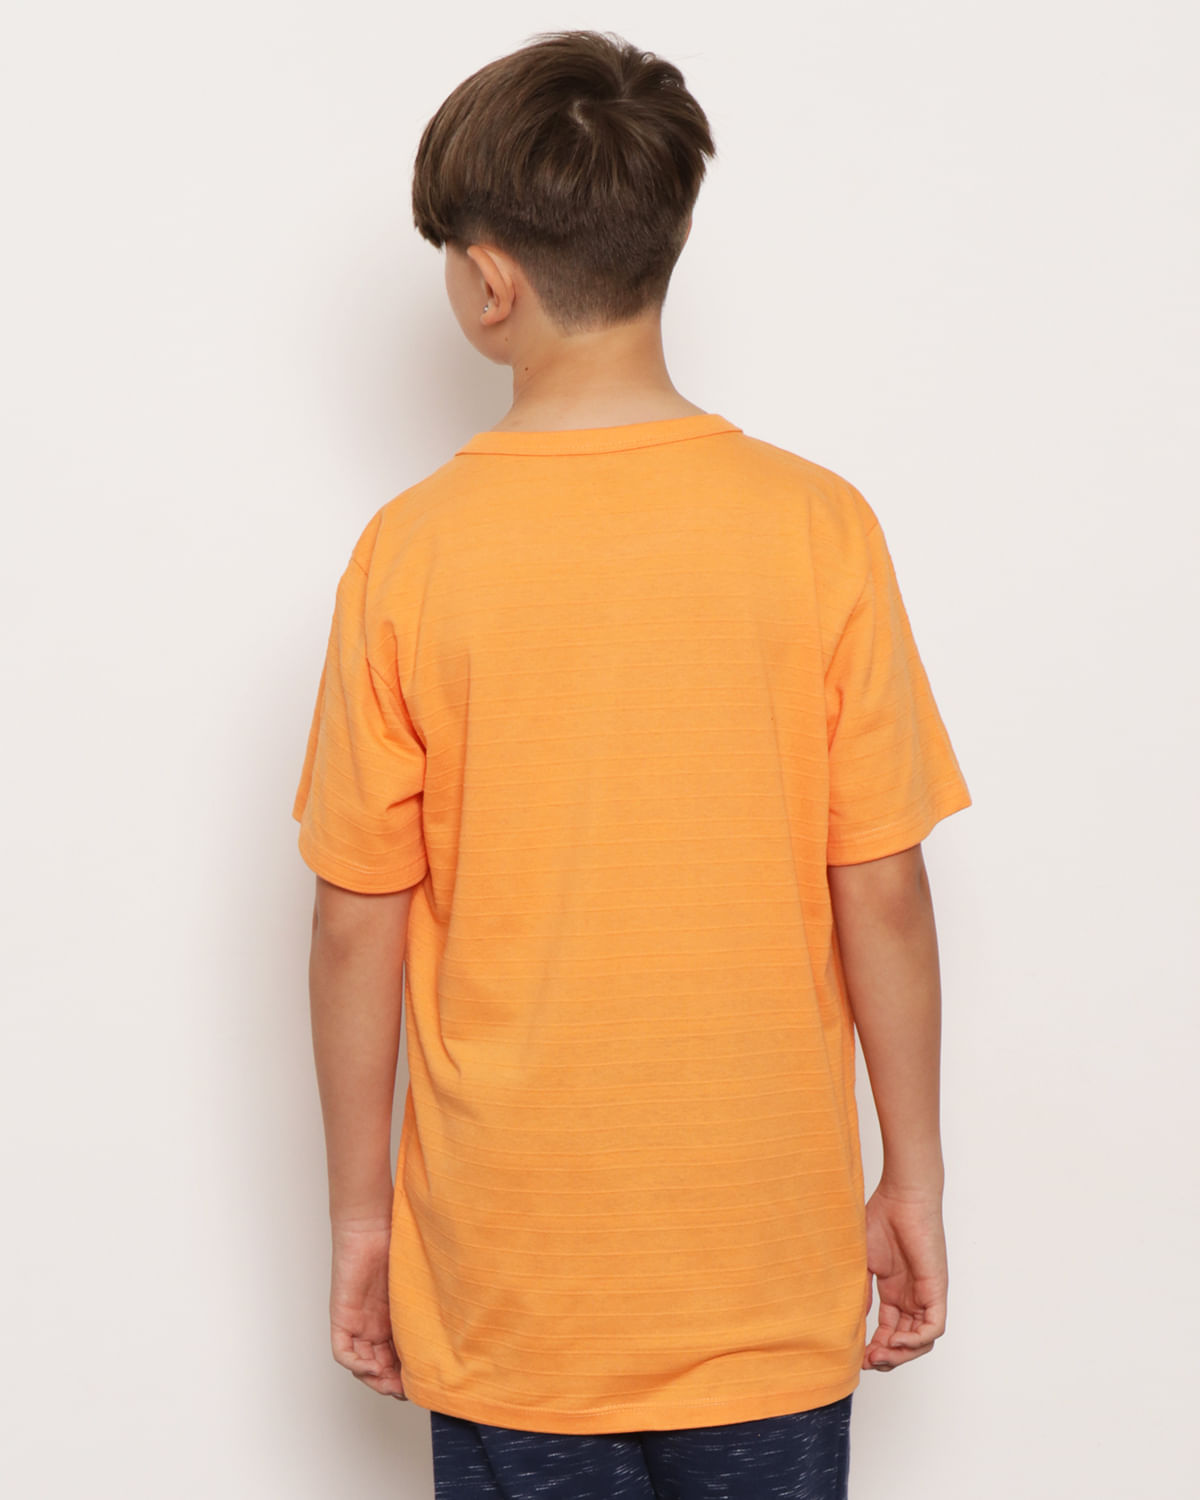 Camiseta-Juvenil-Texturizada-Com-Bolso-Laranja